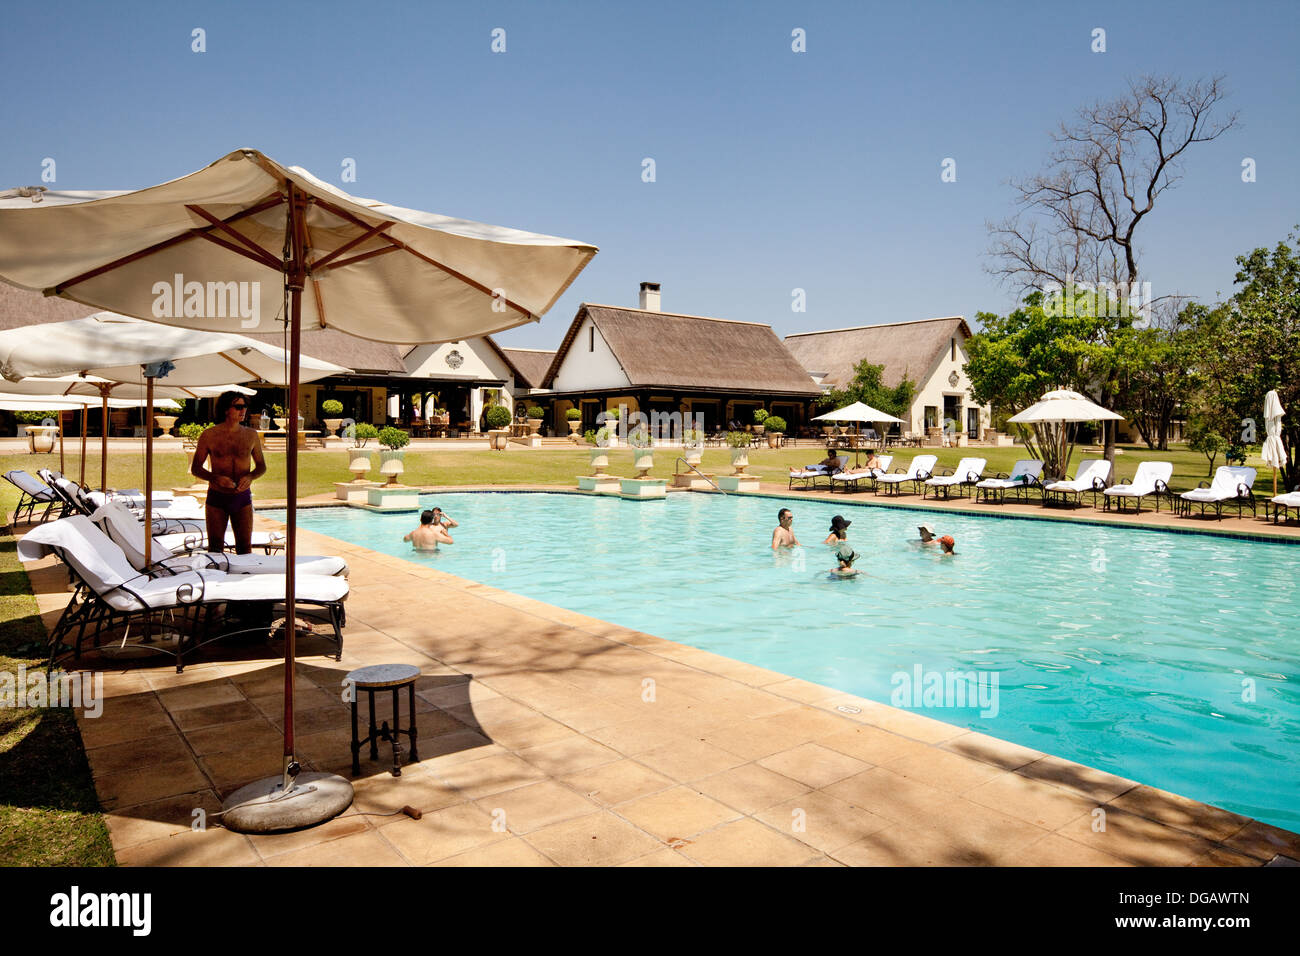 The Royal Livingstone Hotel, luxury 5 star accommodation near the Victoria Falls, Zambia Africa Stock Photo